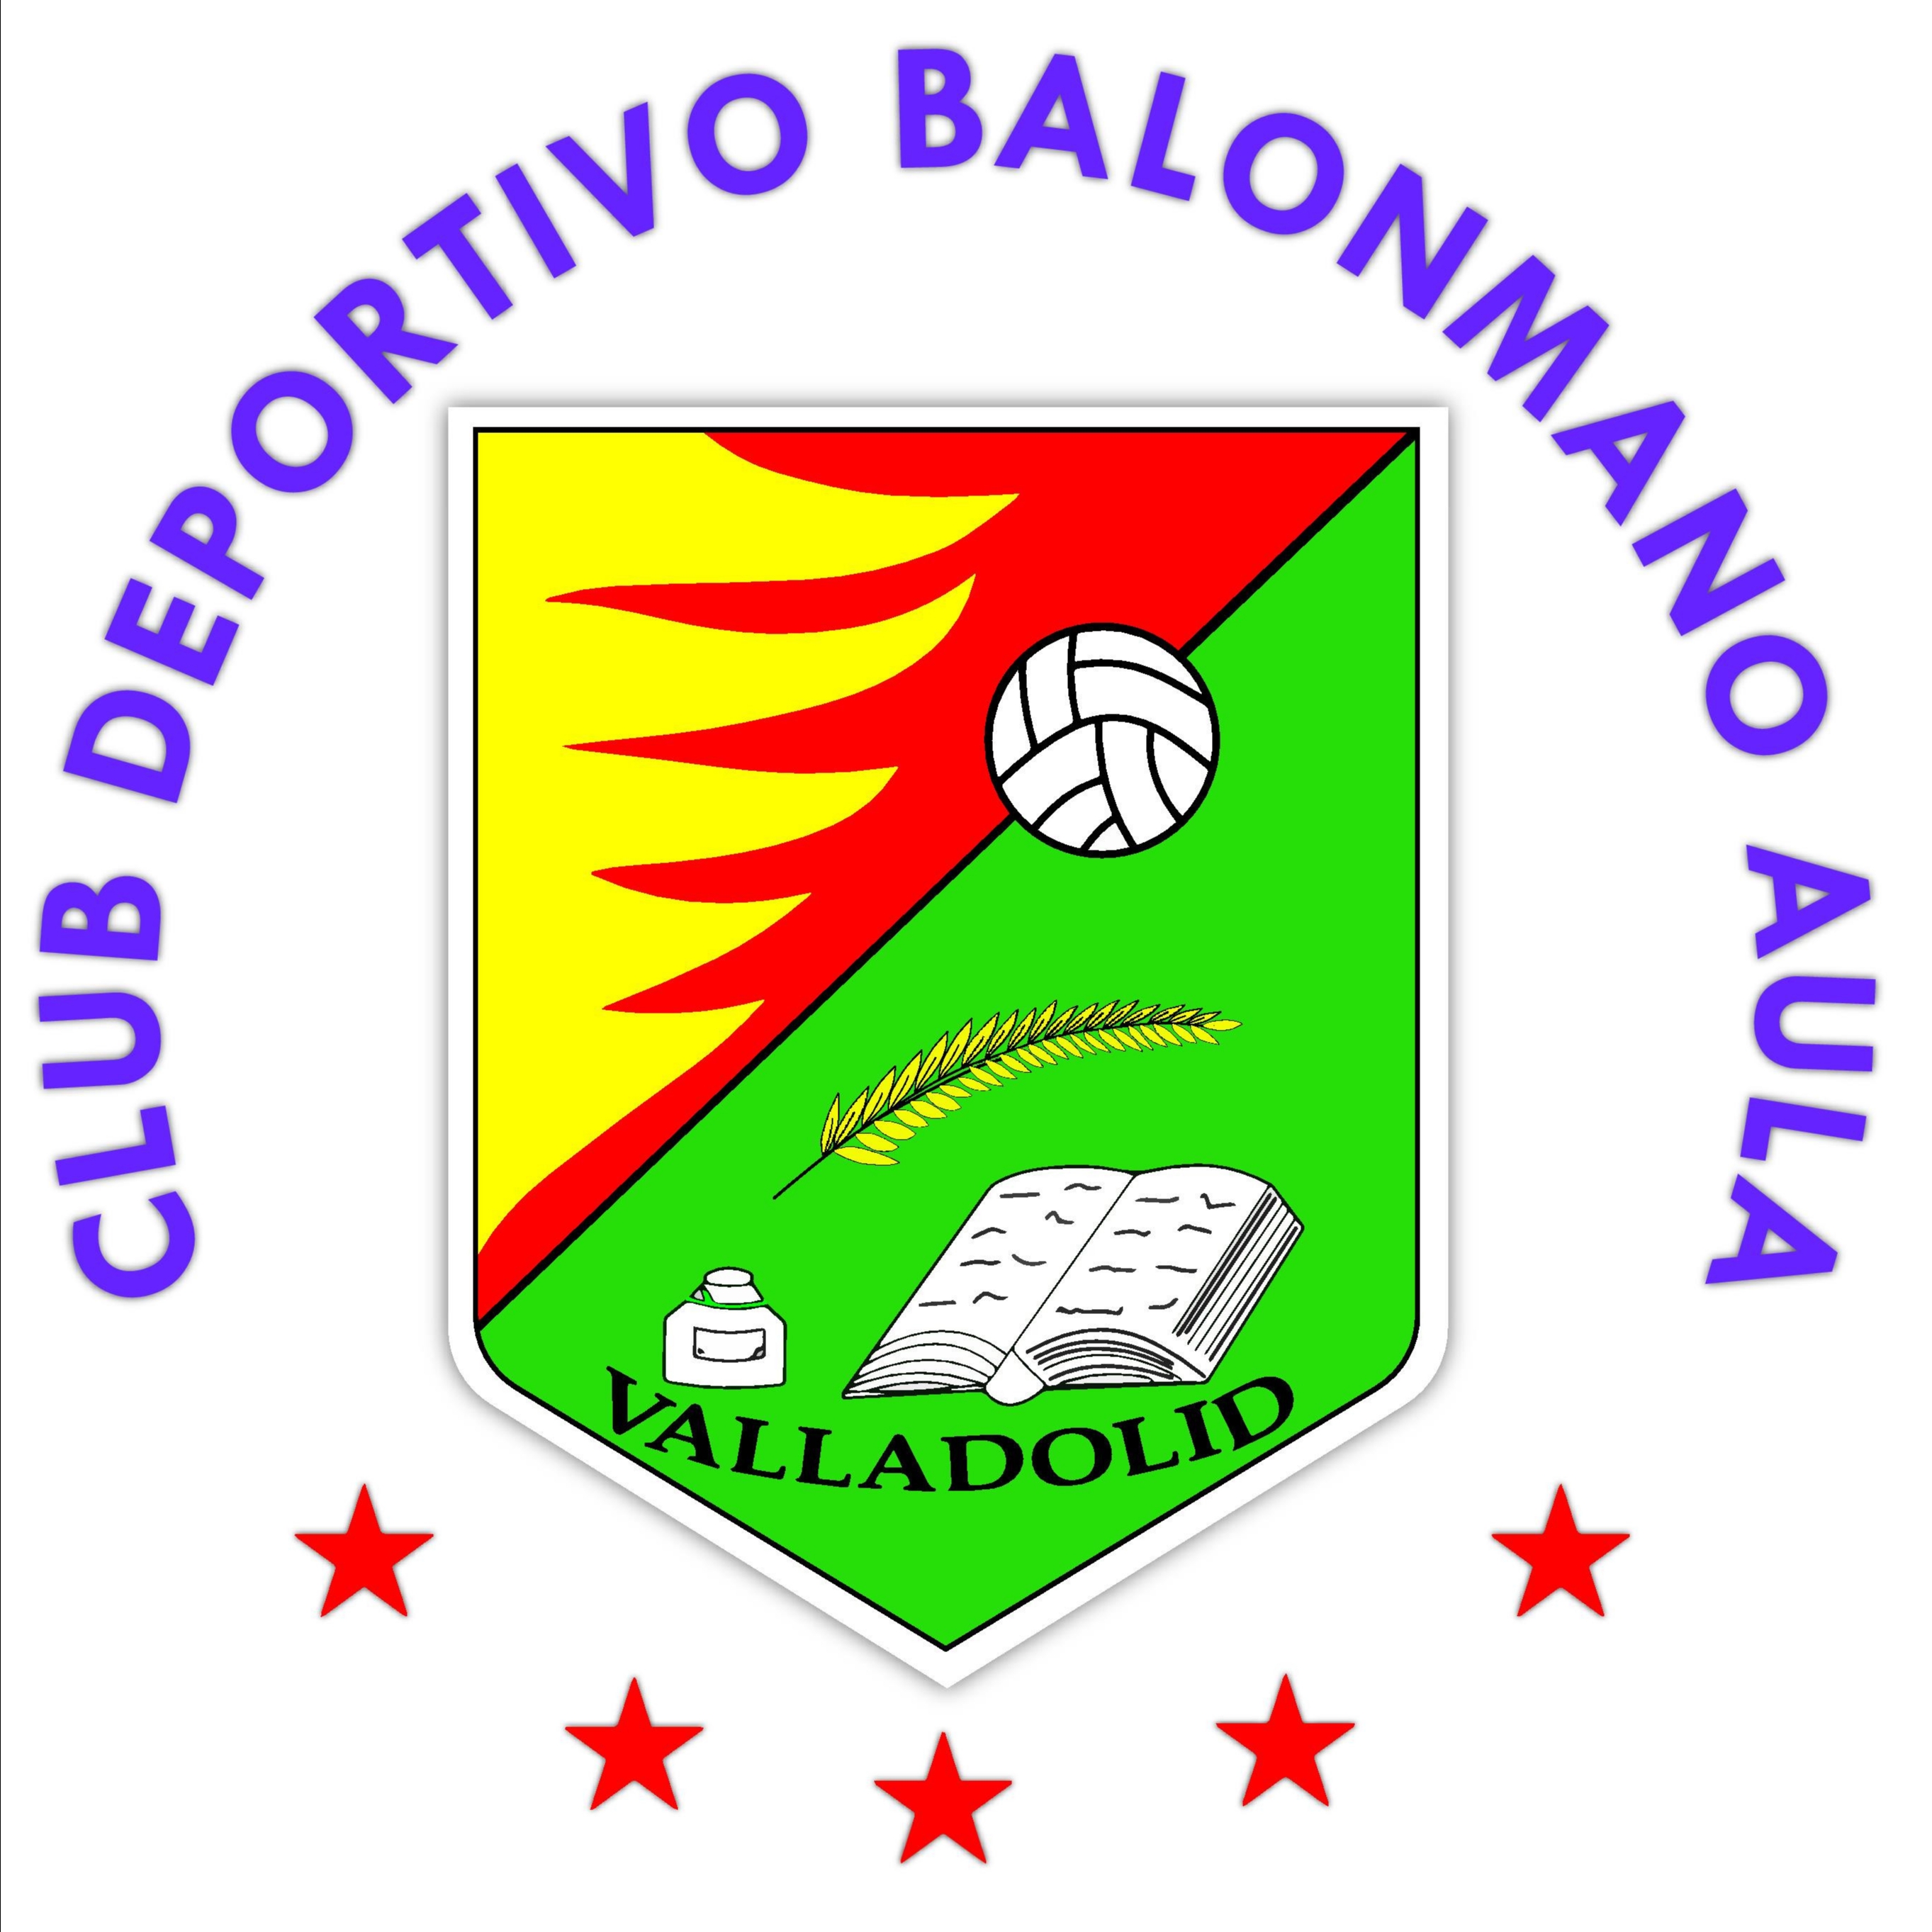 CLUB DEPORTIVO BALONMANO AULA